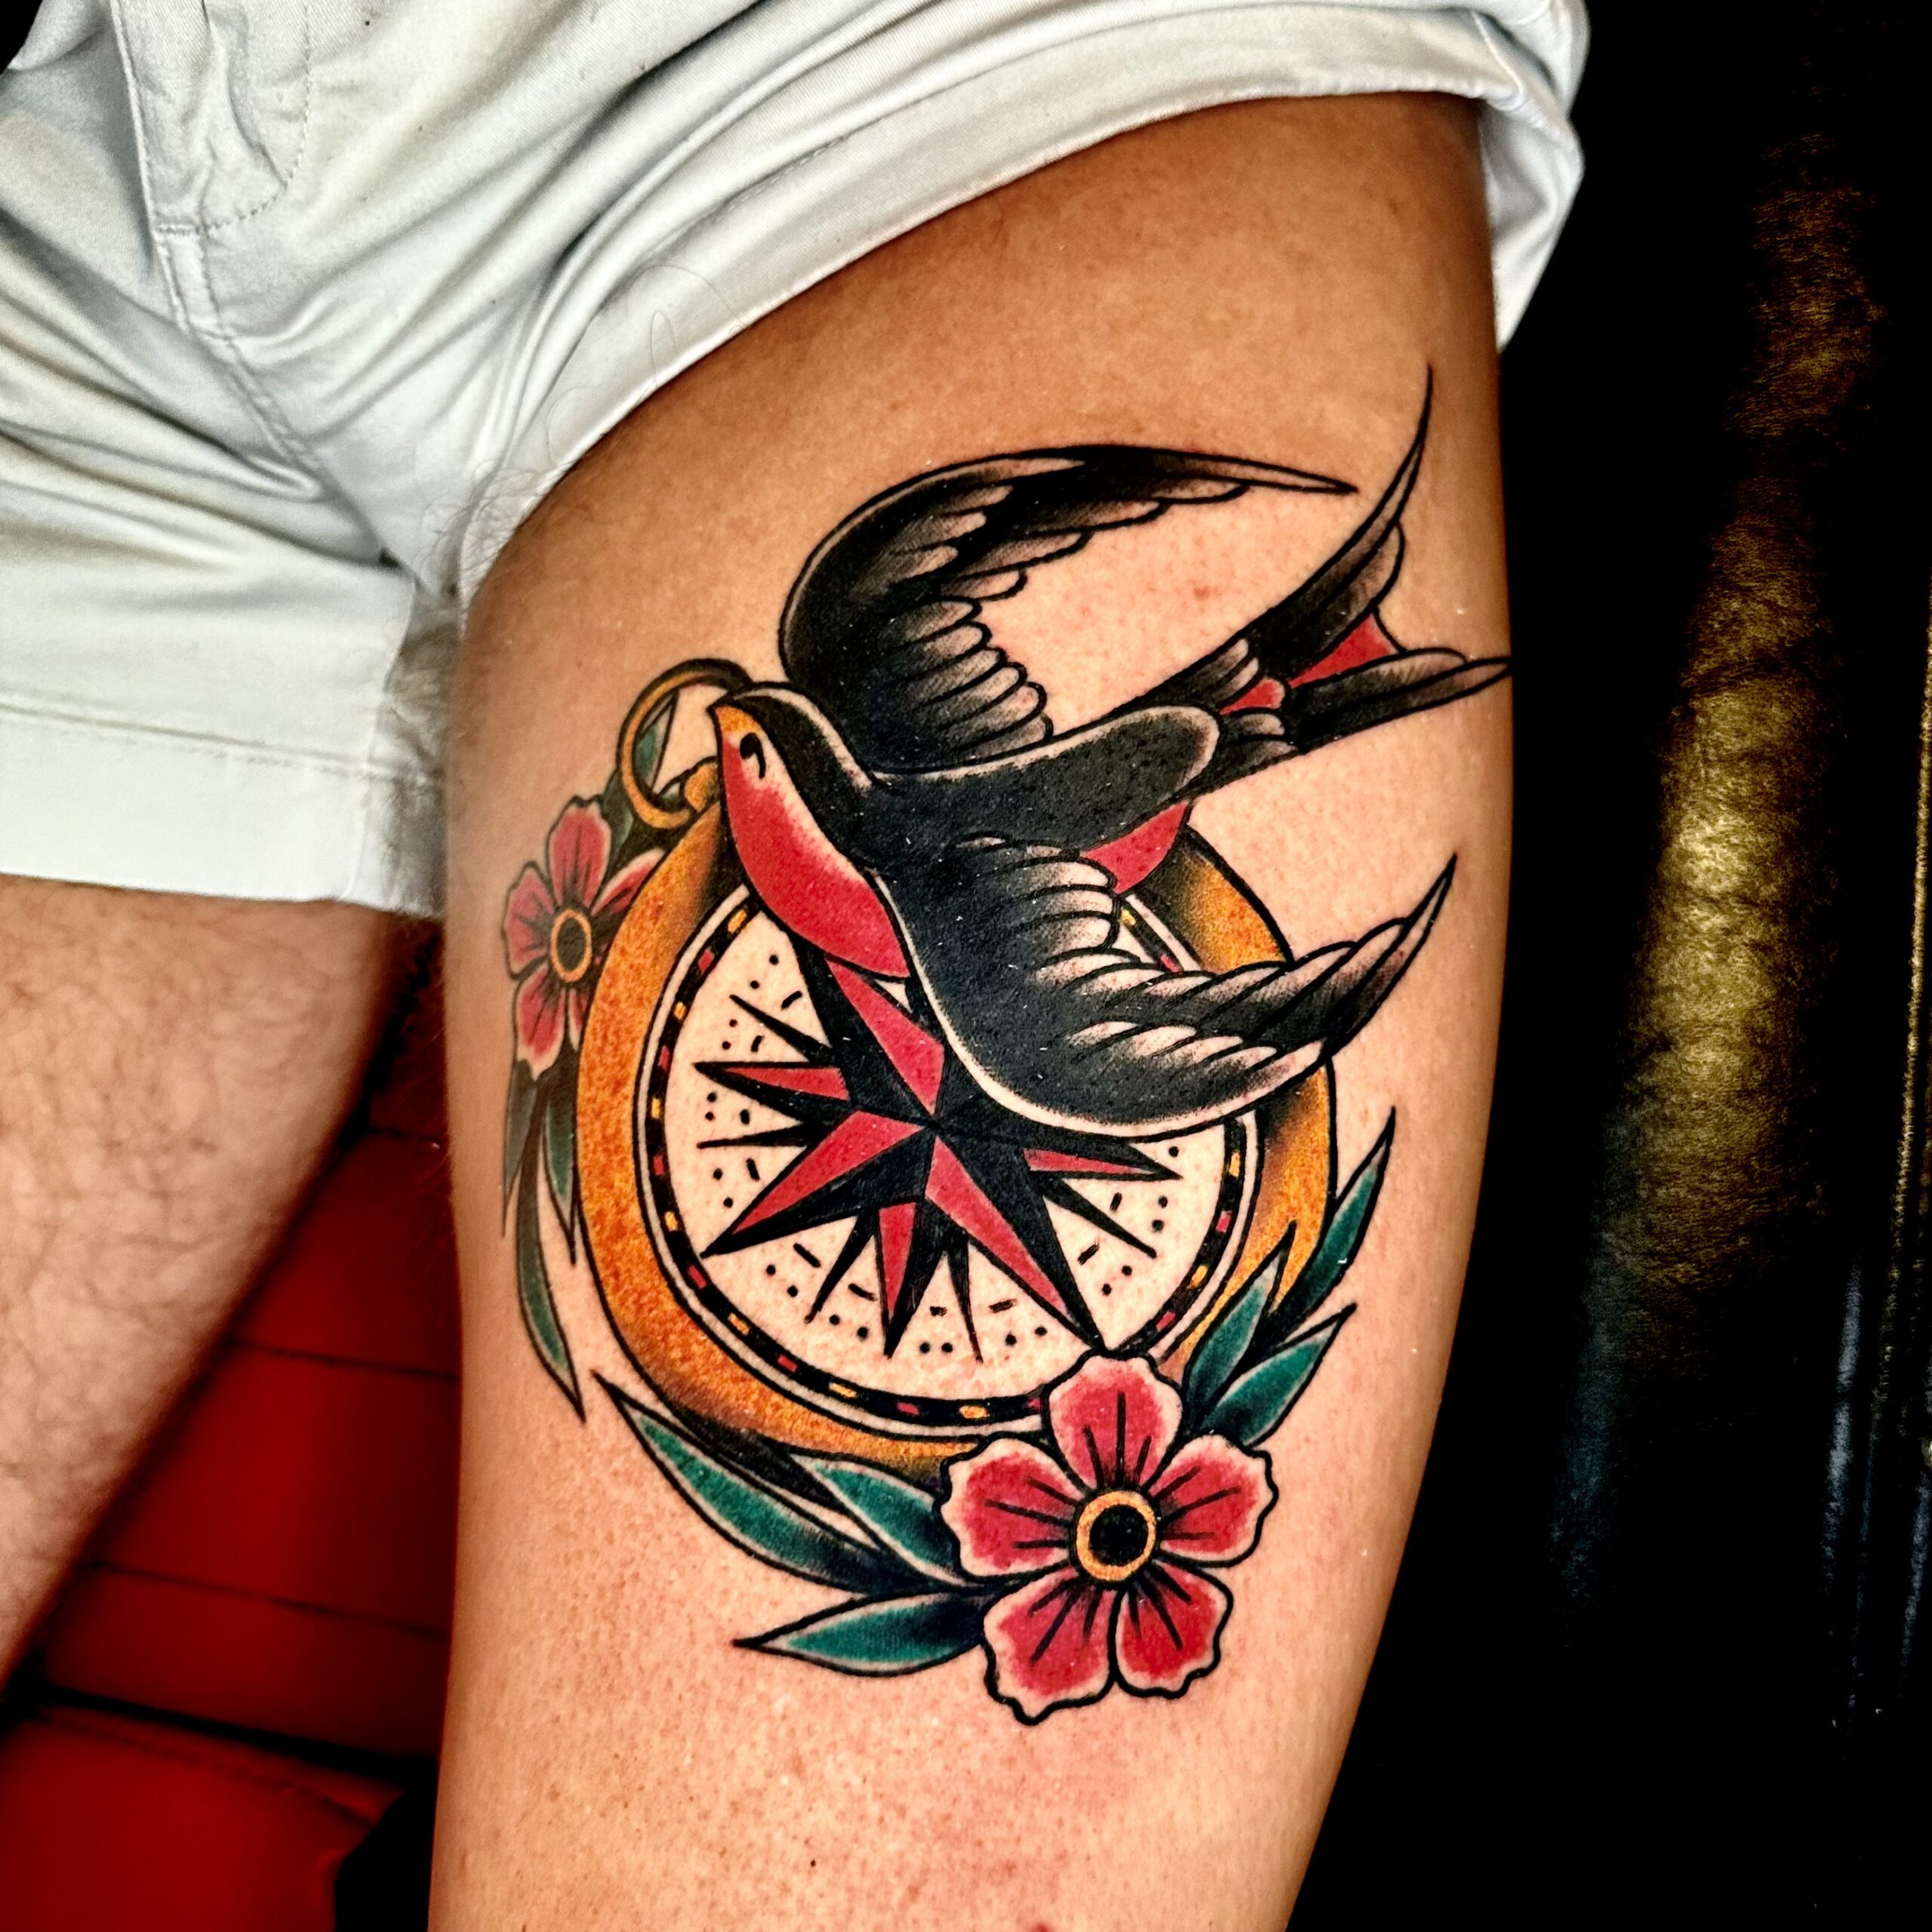 Tattoo of a bird and a compass